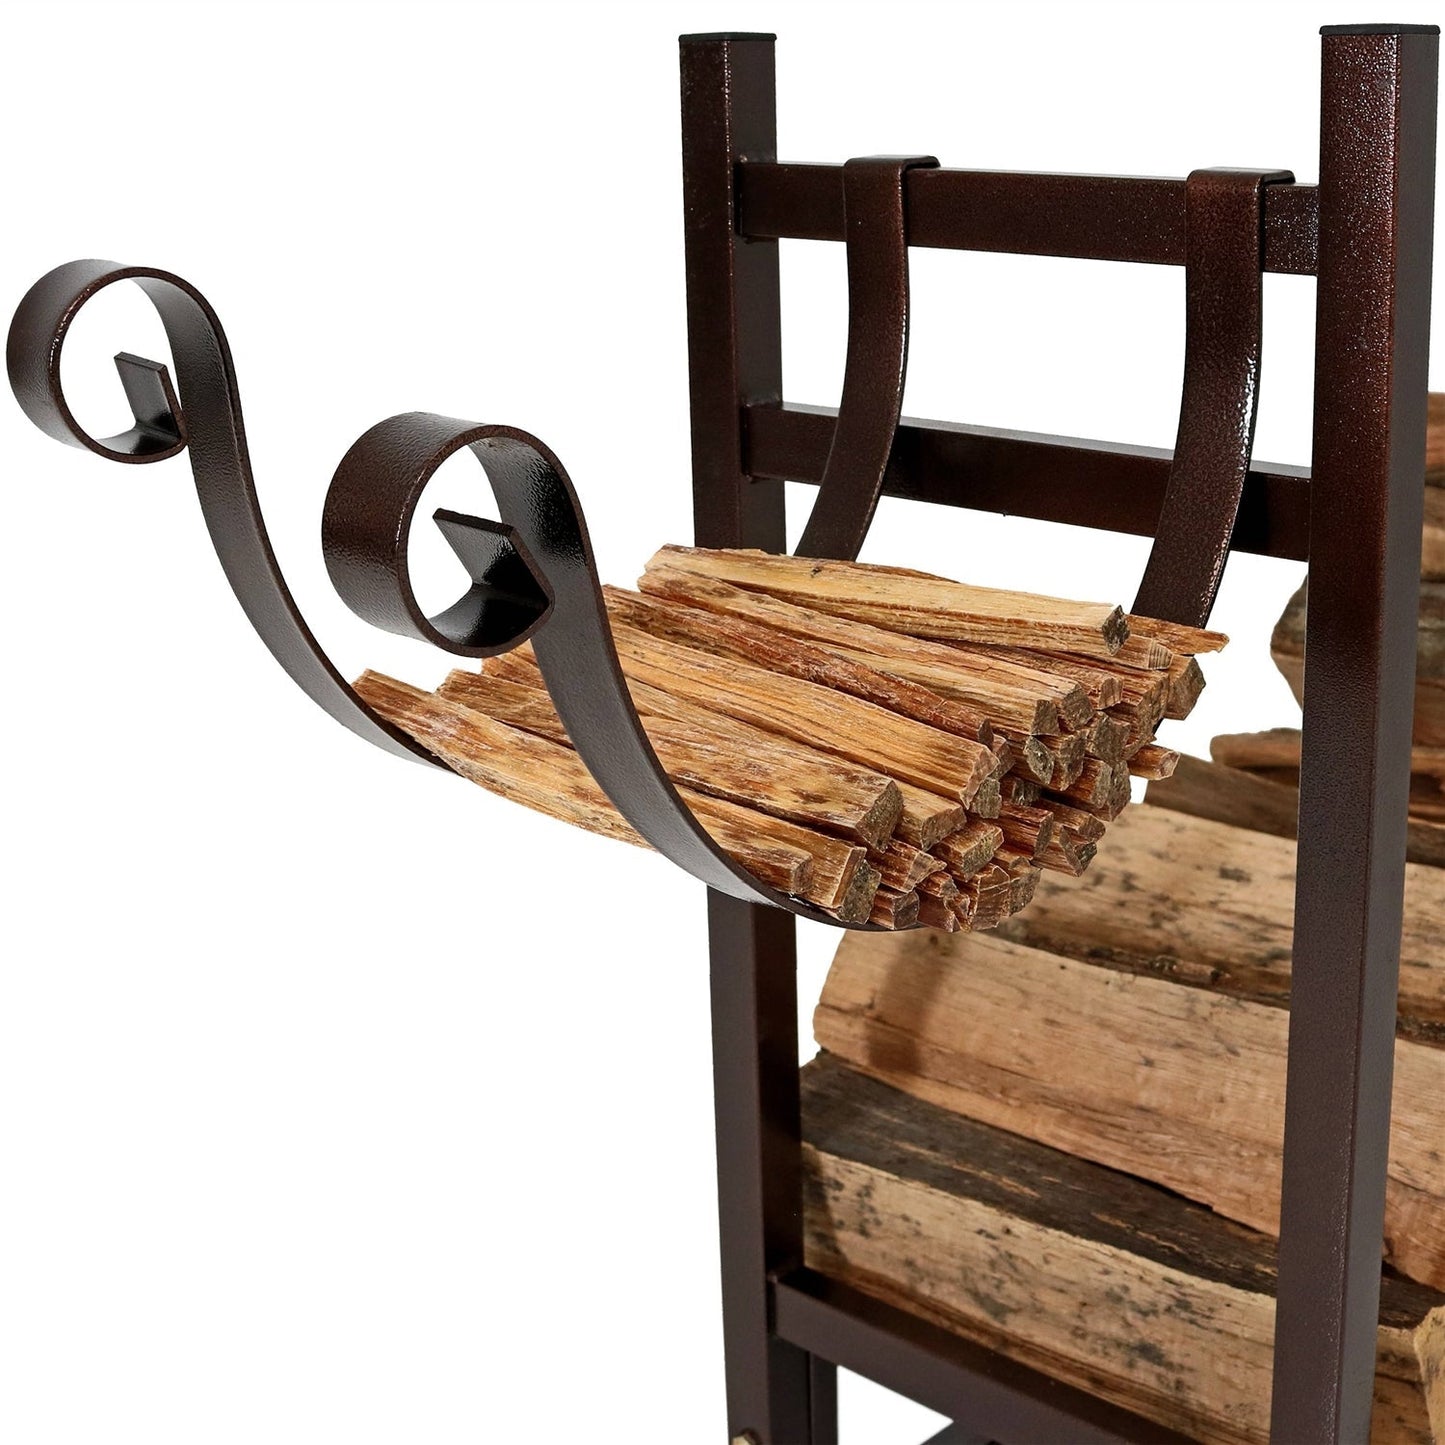 Outdoor > Firewood Racks - Bronze Metal Indoor/Outdoor Firewood Log Rack With Removeable Kindle Holder